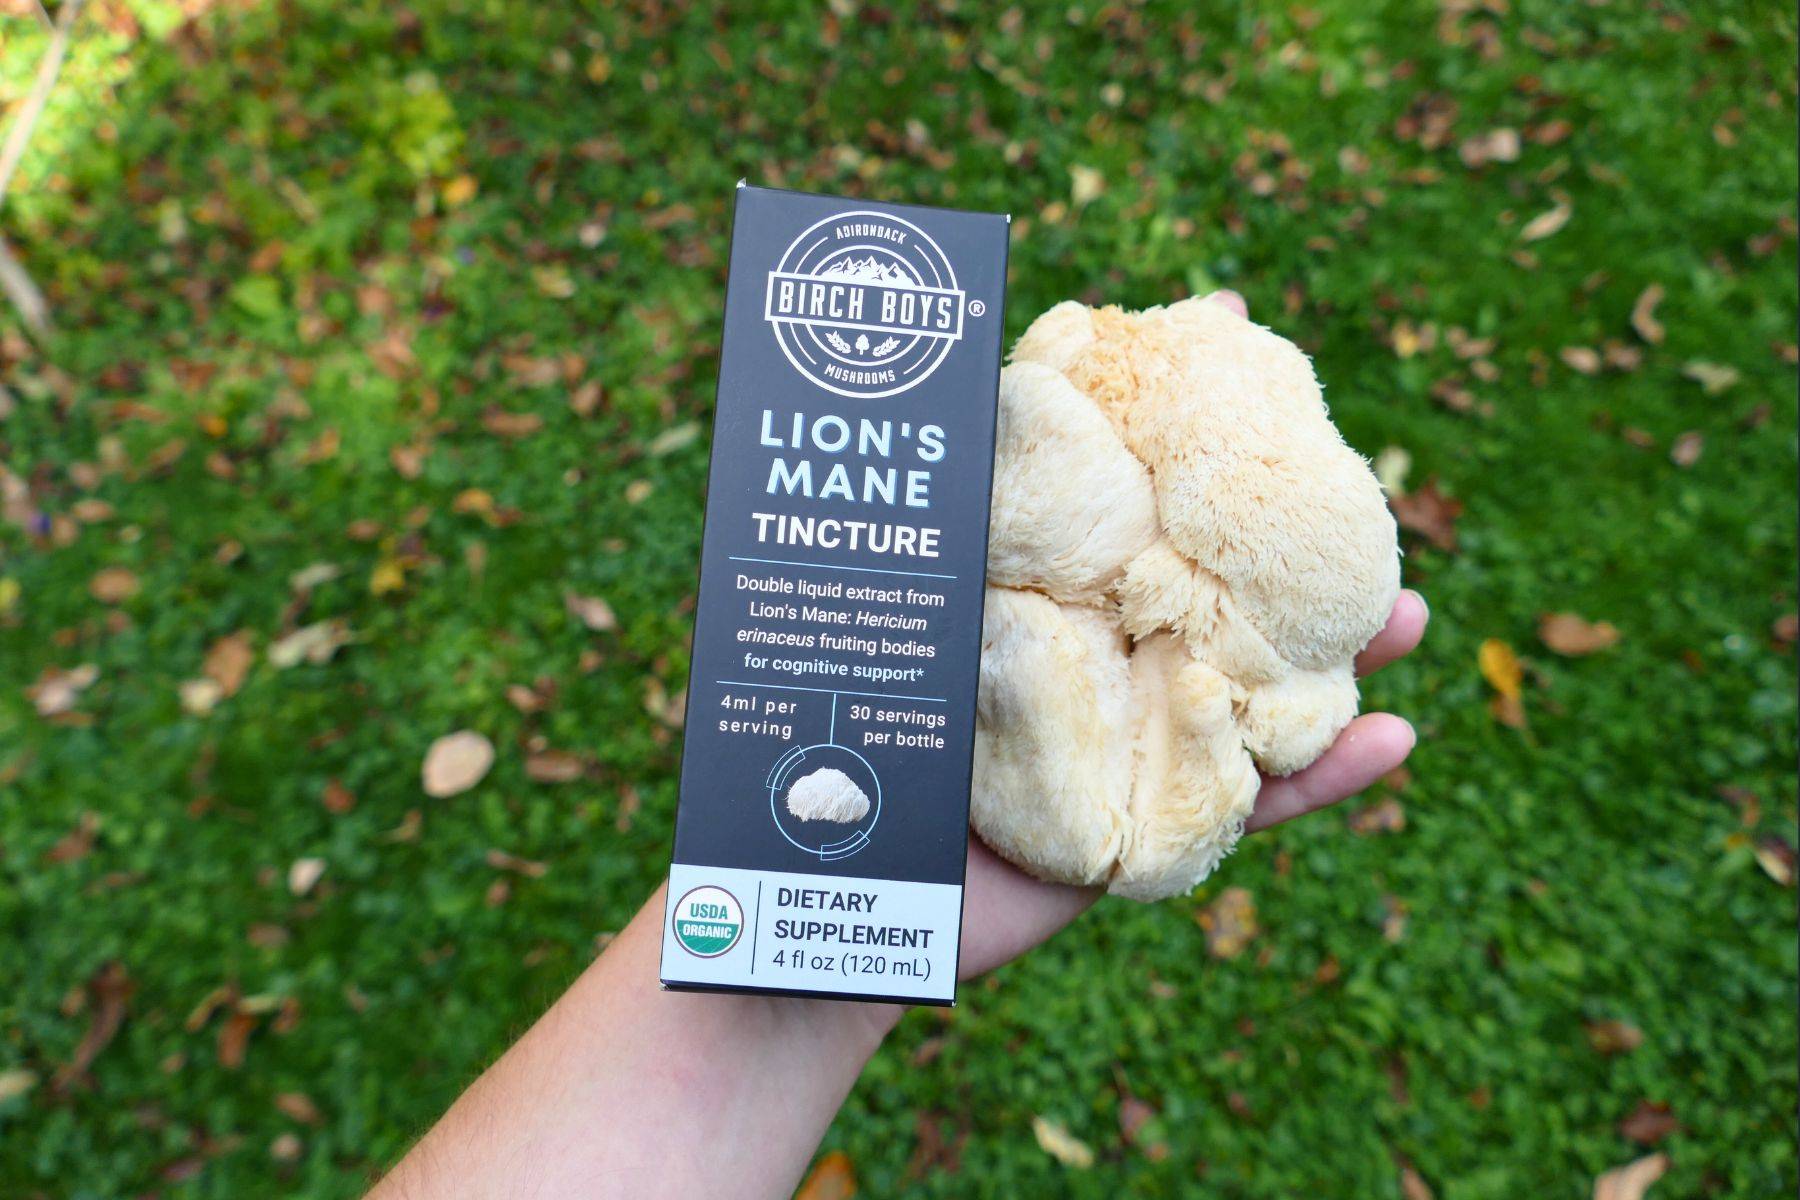 Birch Boys Lion's Mane Mushroom Tincture with fresh lion's amne fruiting body